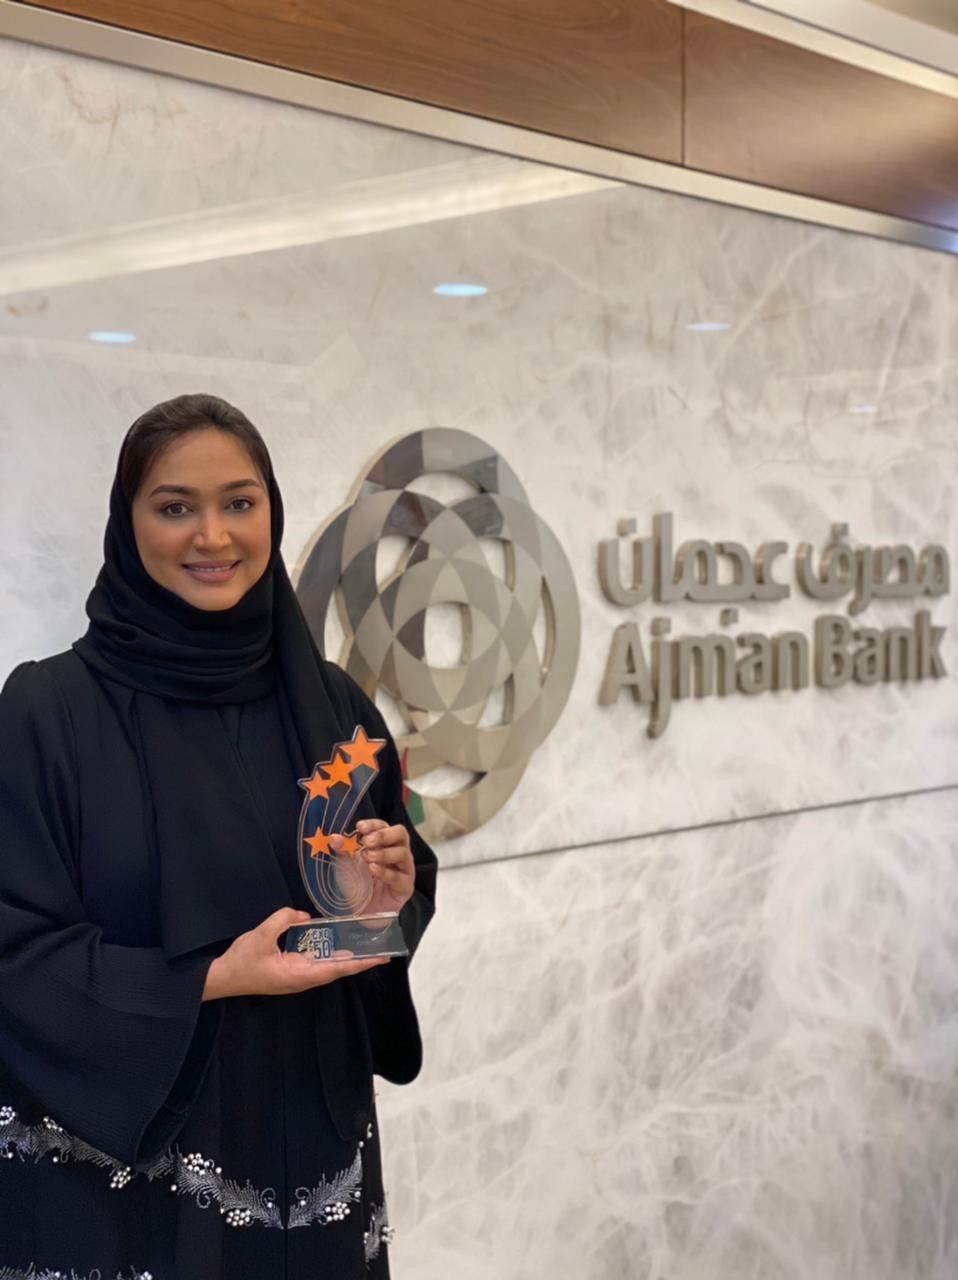 Ajman Bank’s IT Head Wins CXO Award 2021